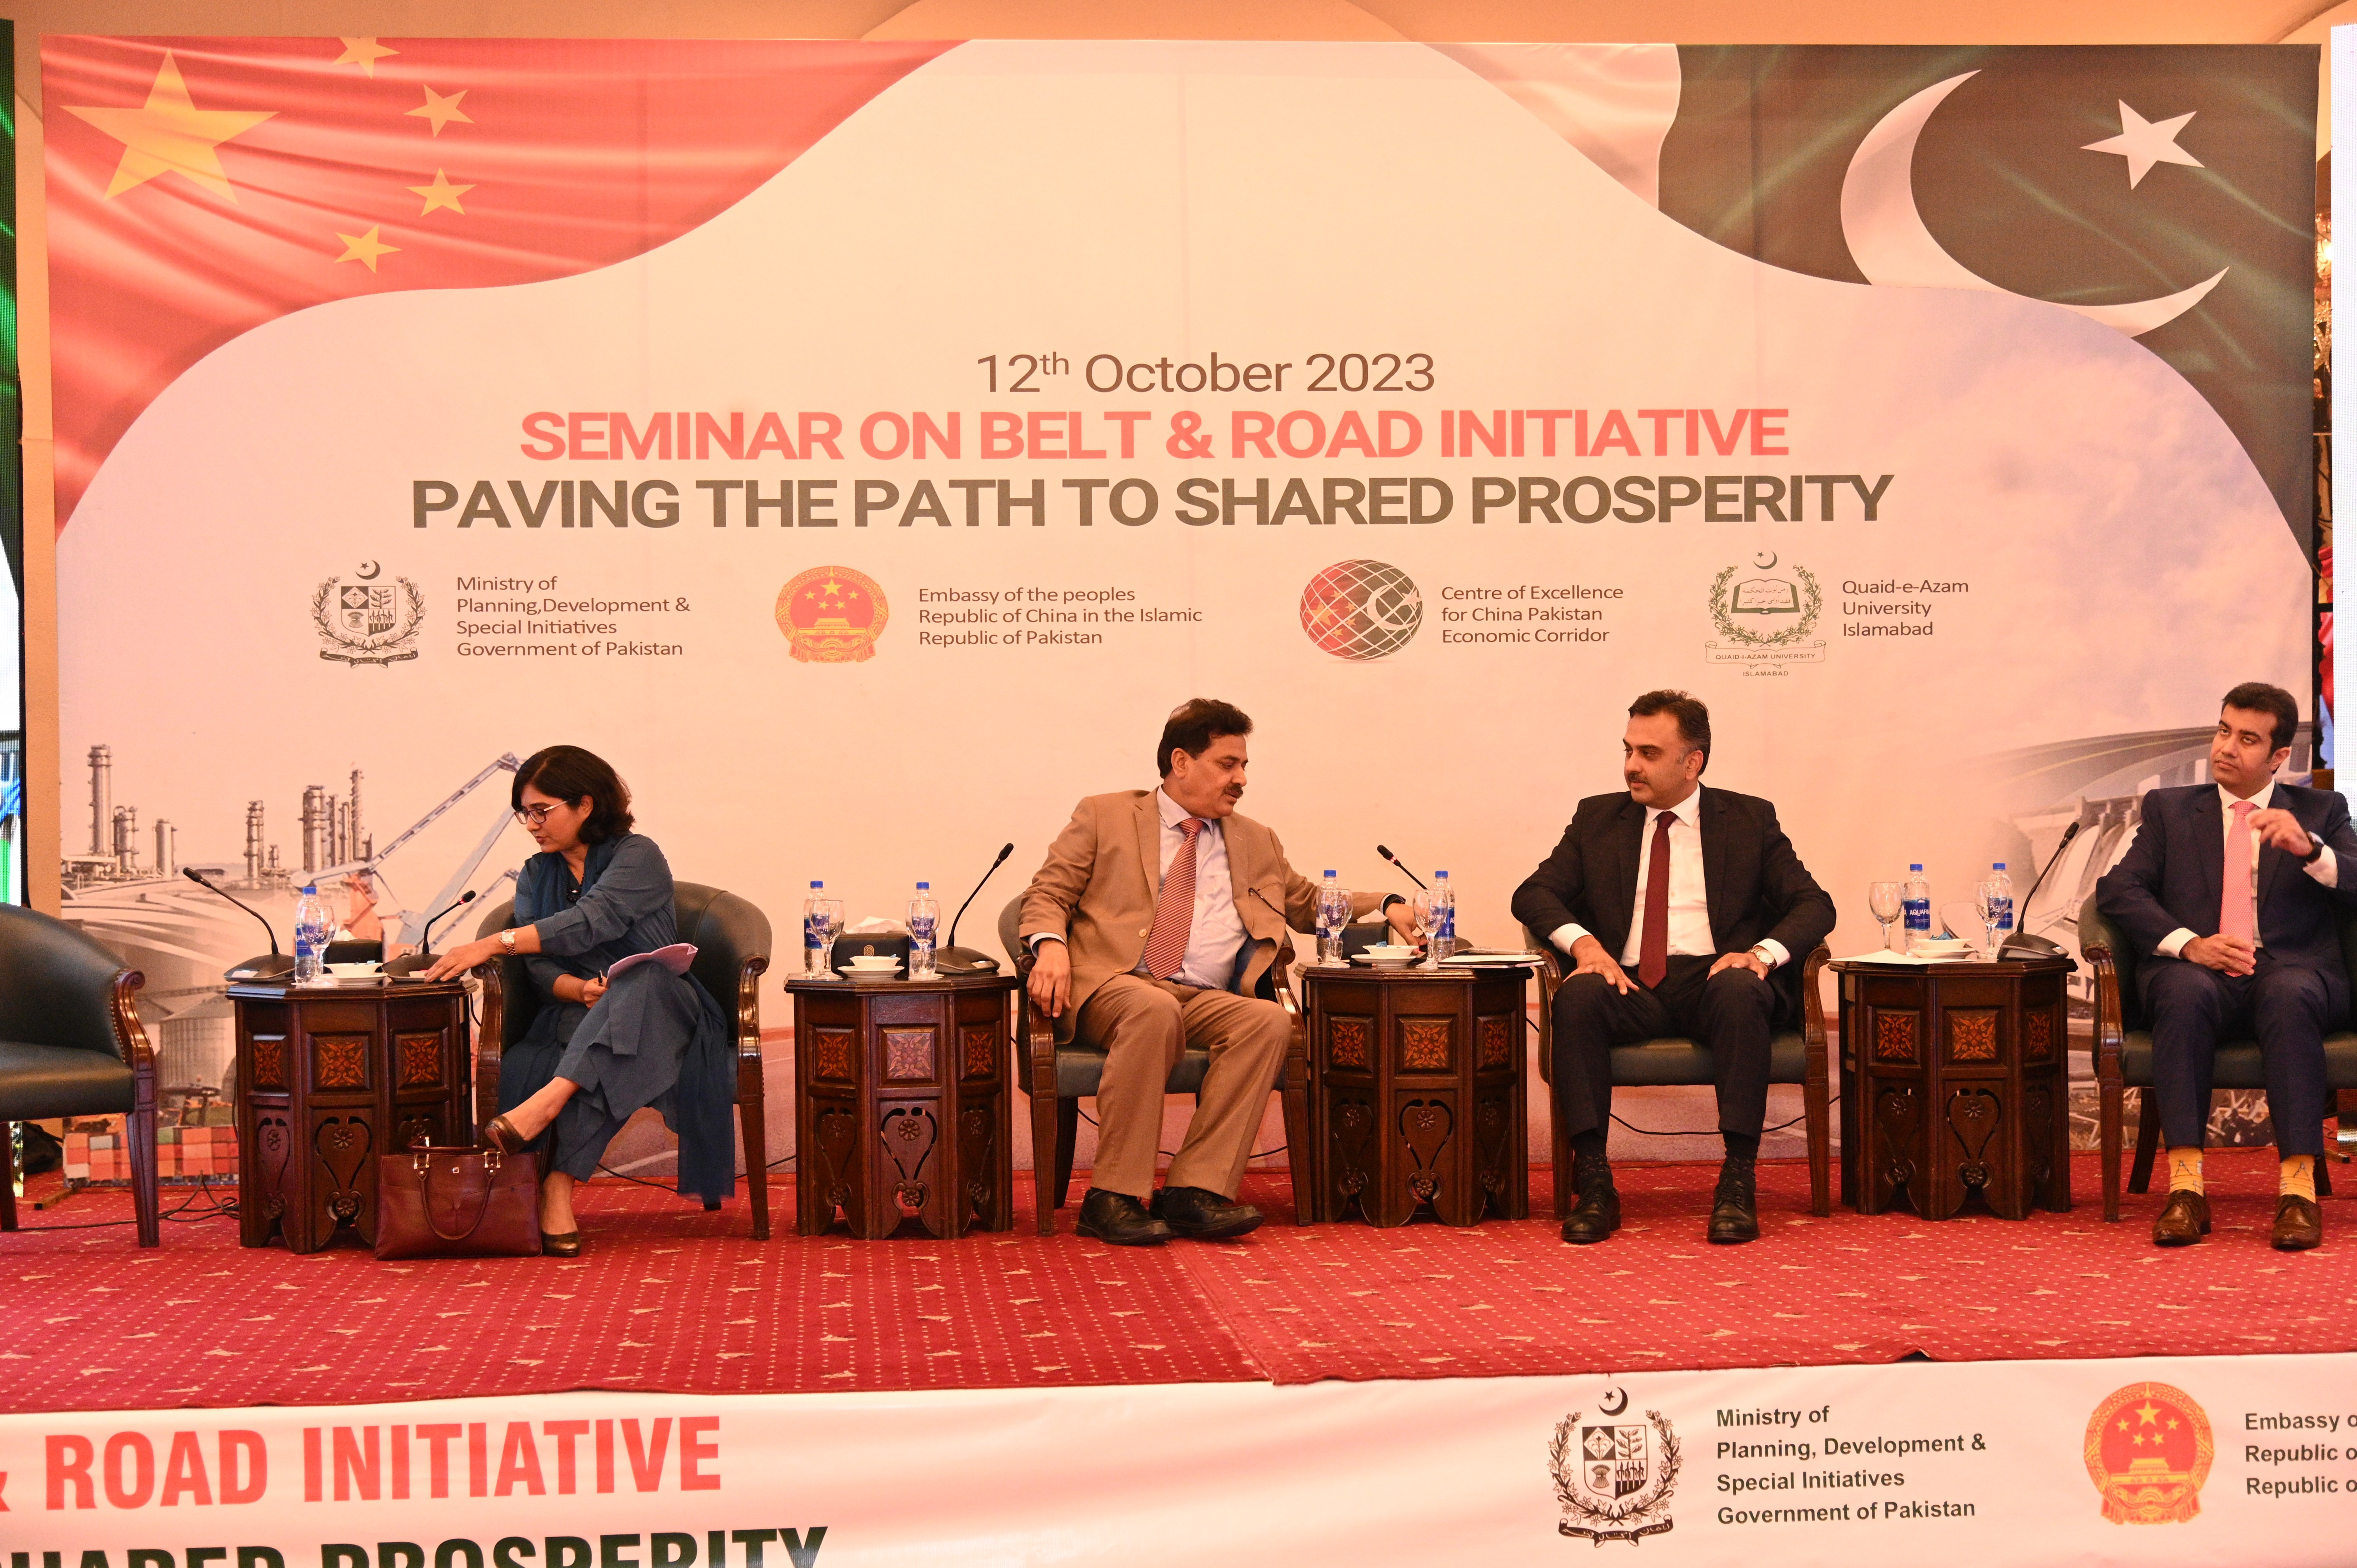 A panel comprising of Zeeshan Aslam, Syed Zafar Hassan (Secretary MoPD&SI), Dr Shazia Ghani and Shoaib Naseera